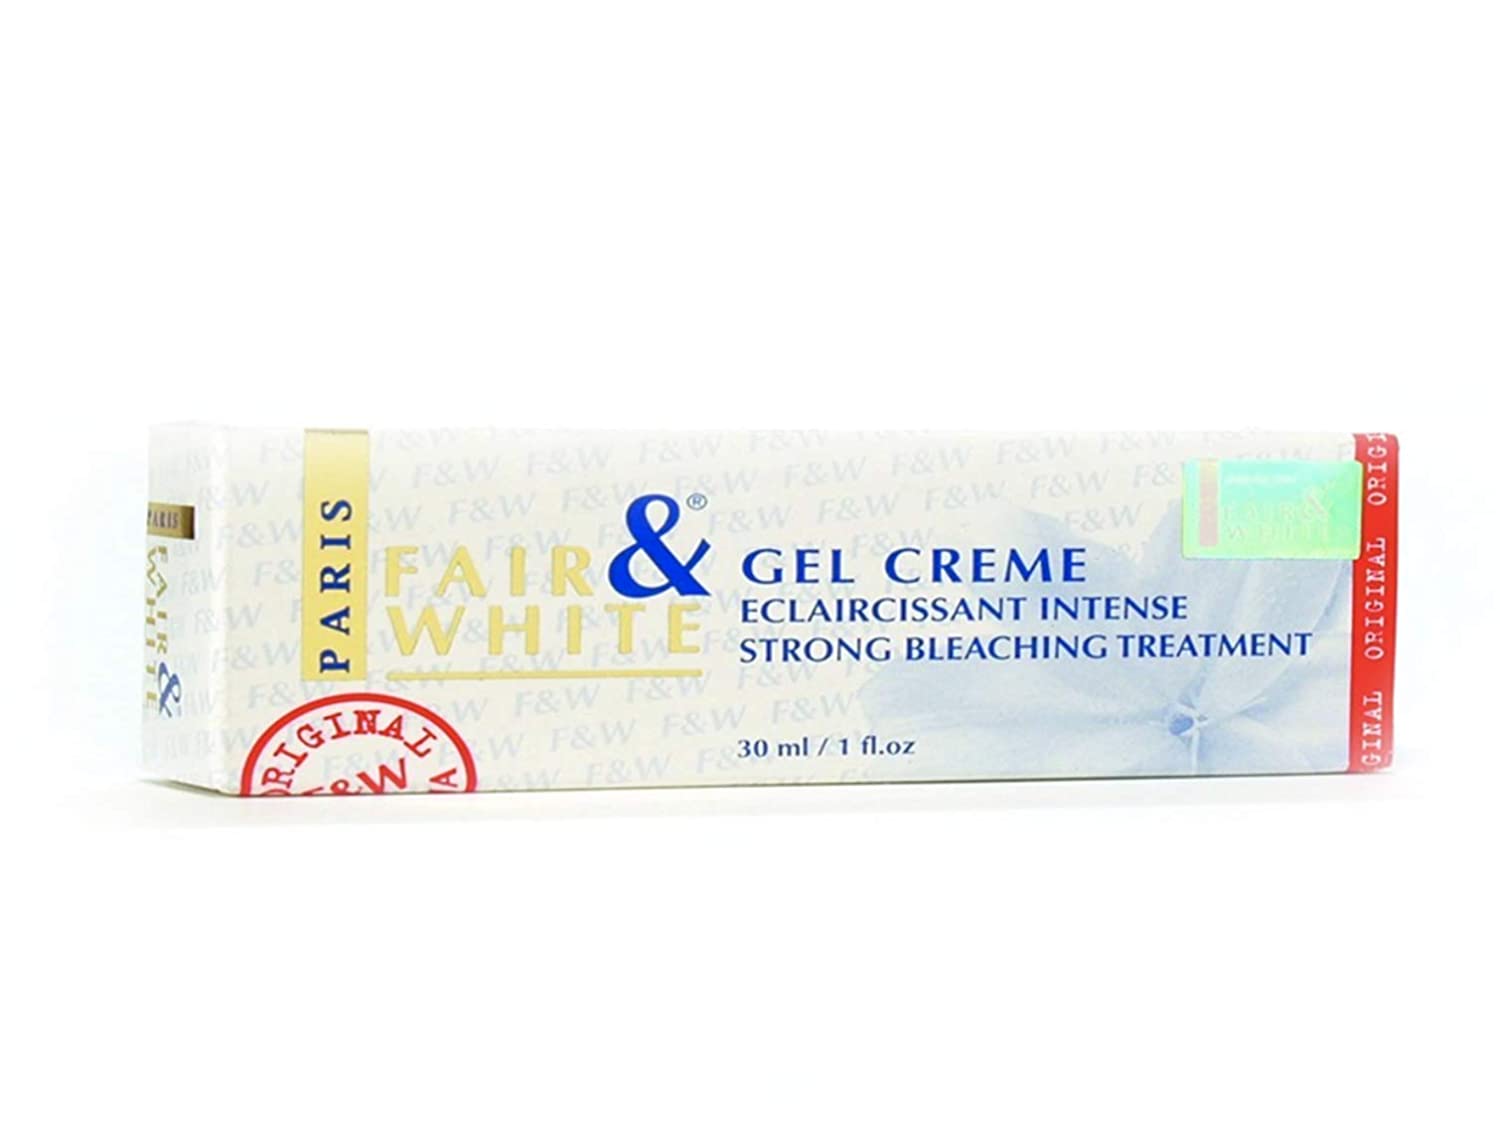 F&W Original Whitening Gel Cream 30g